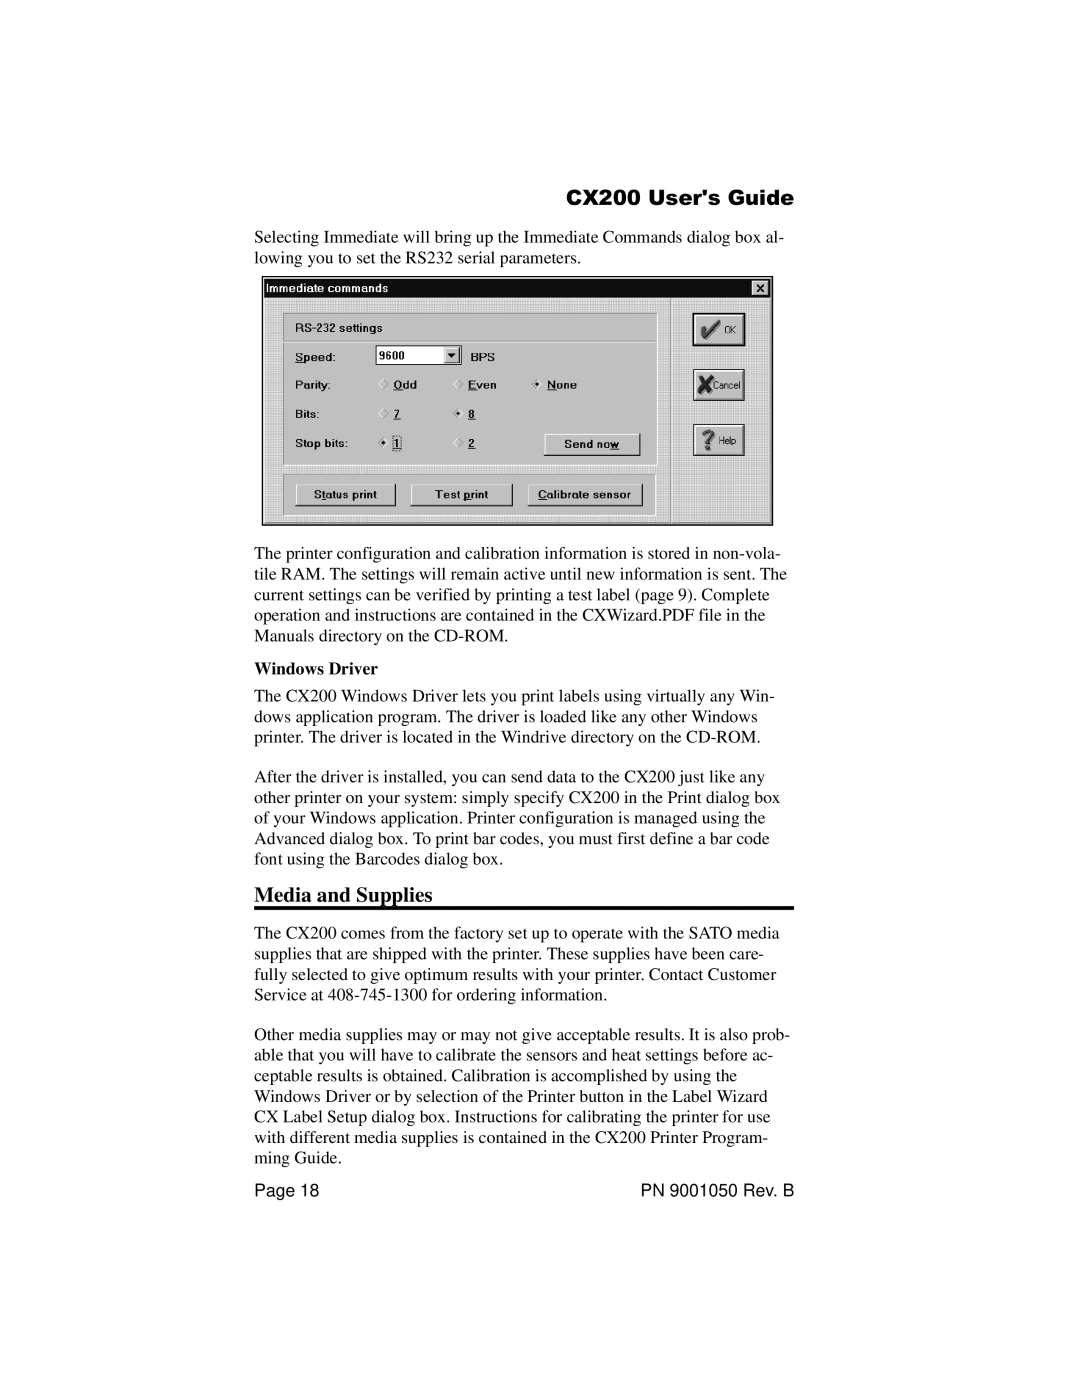 SATO manual Media and Supplies, Windows Driver, CX200 Users Guide 